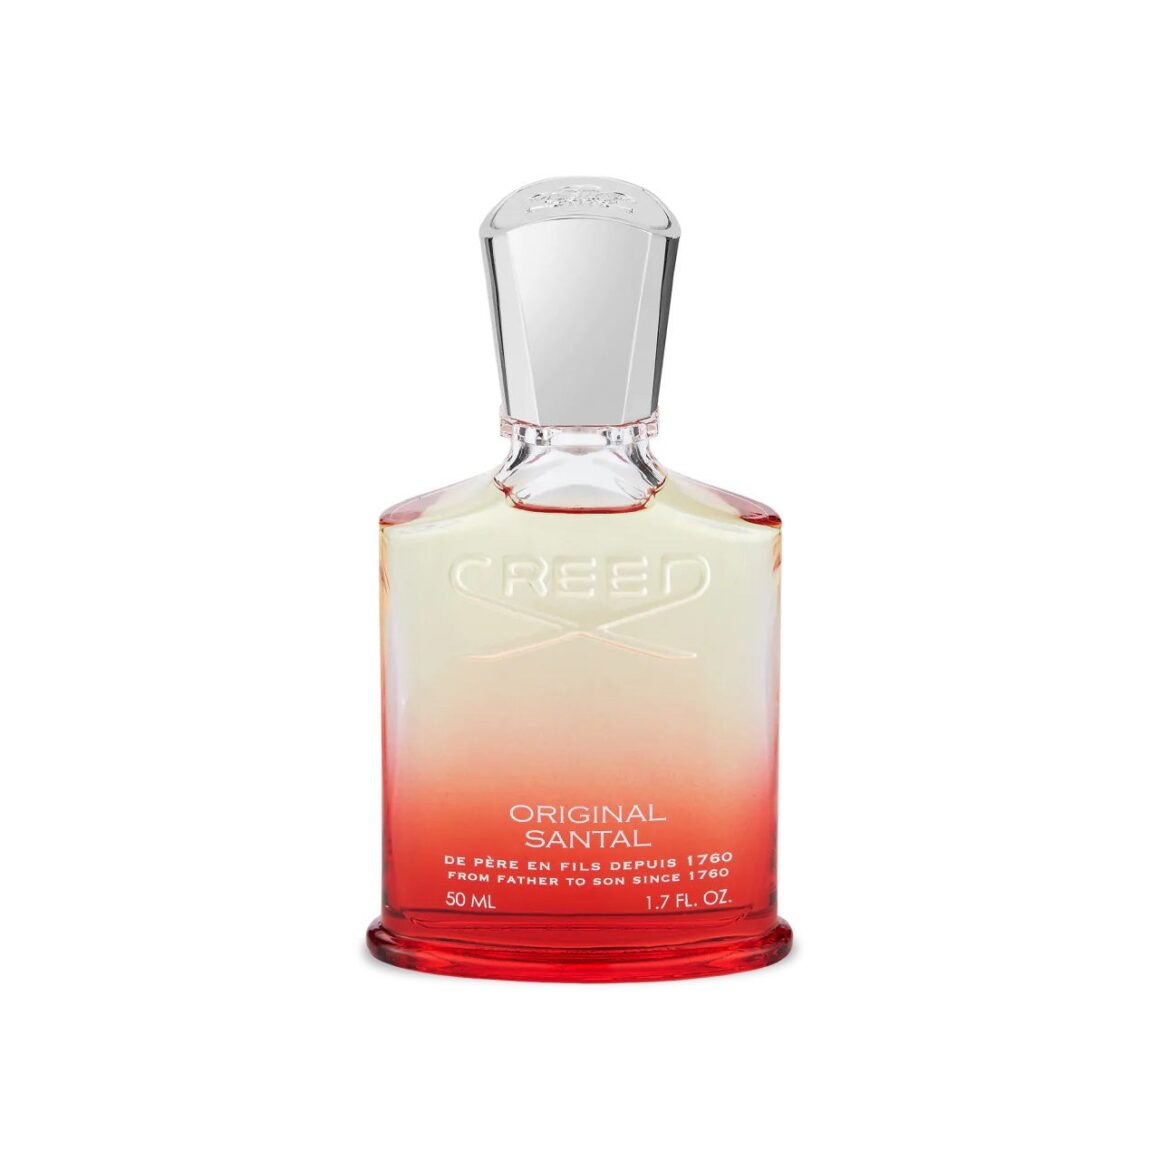 Creed Original Santal, men's spring scents